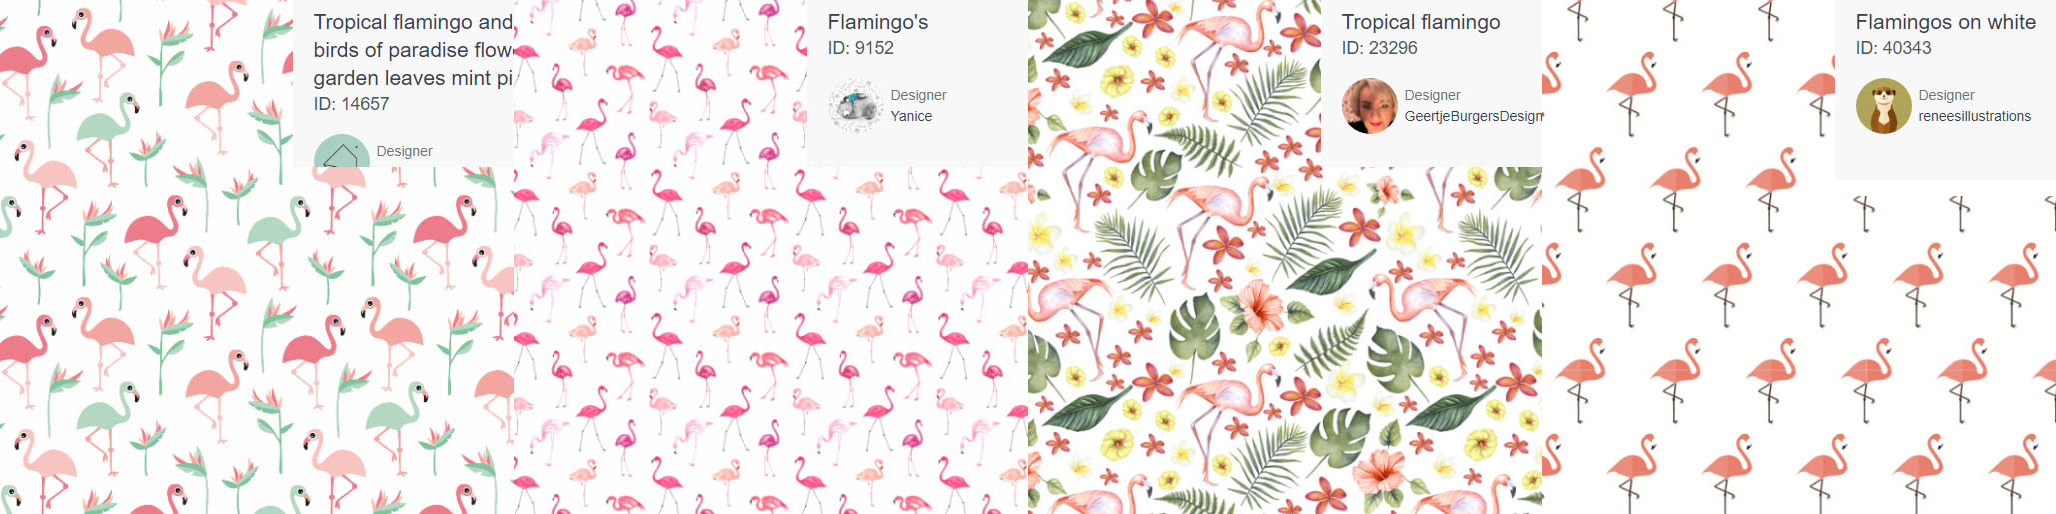 flamingo patronen collage 02jpg